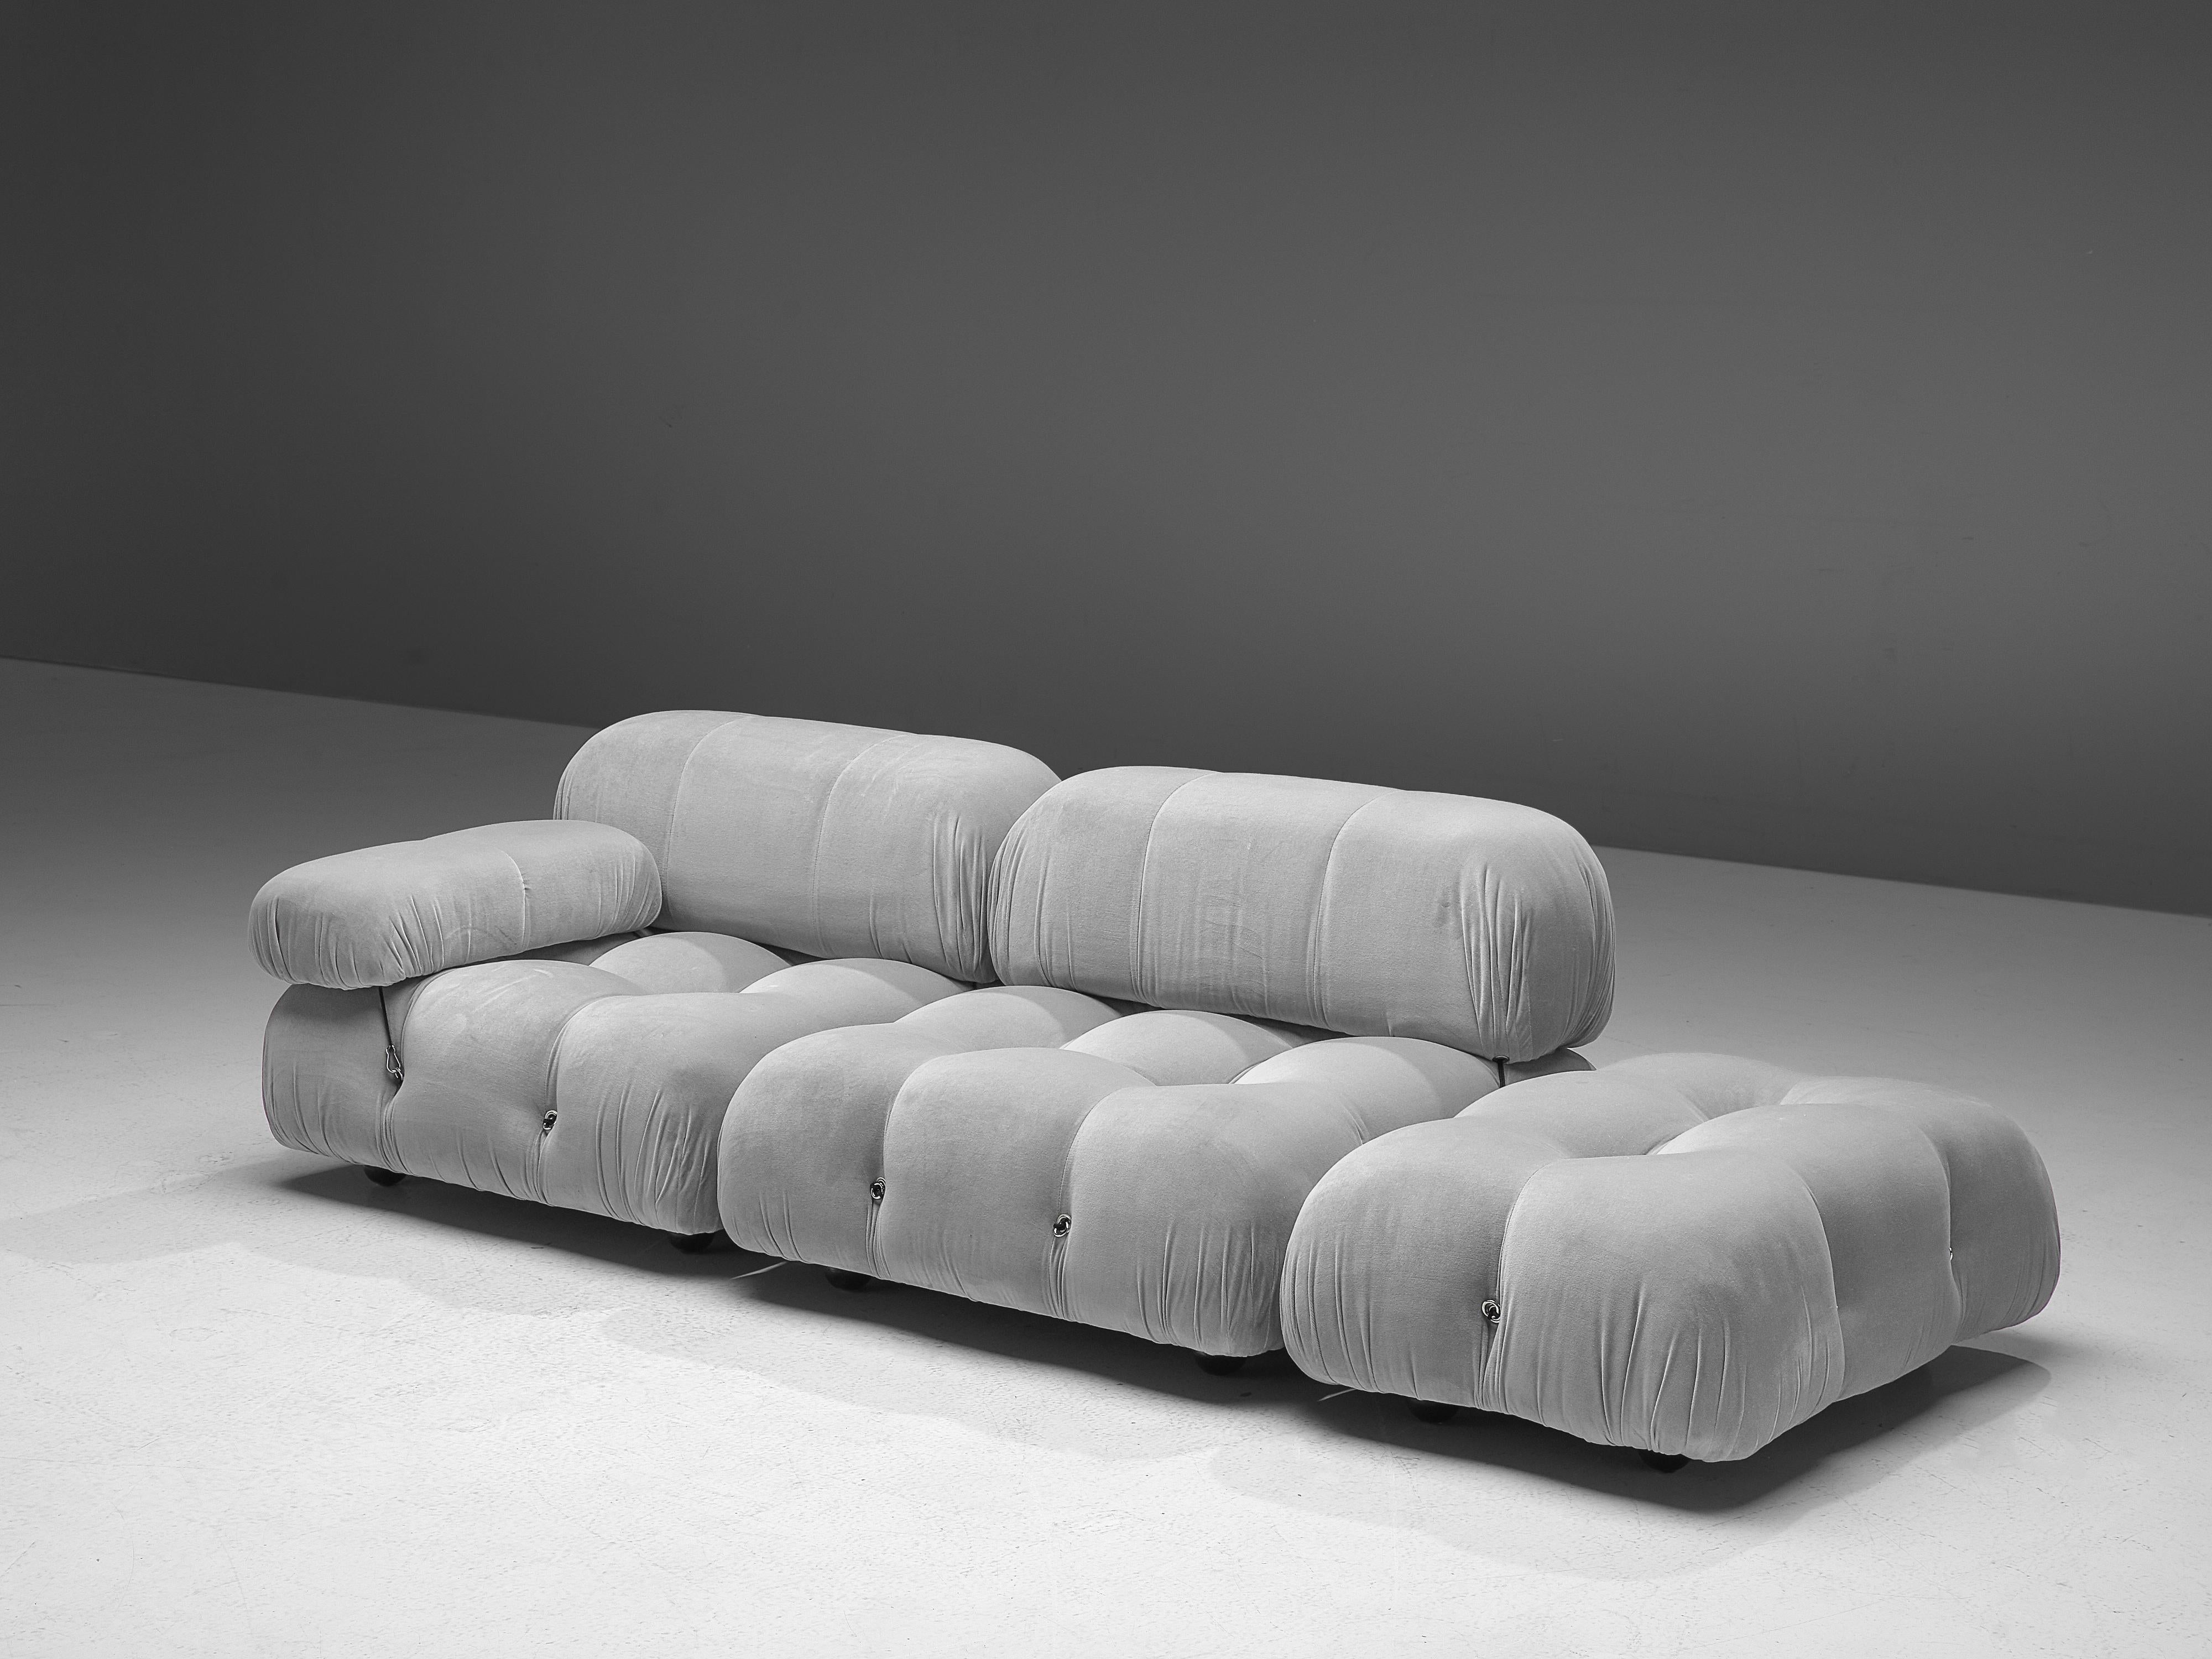 Mario Bellini 'Camaleonda' Modular Sofa in Soft Pink Fabric Upholstery 1